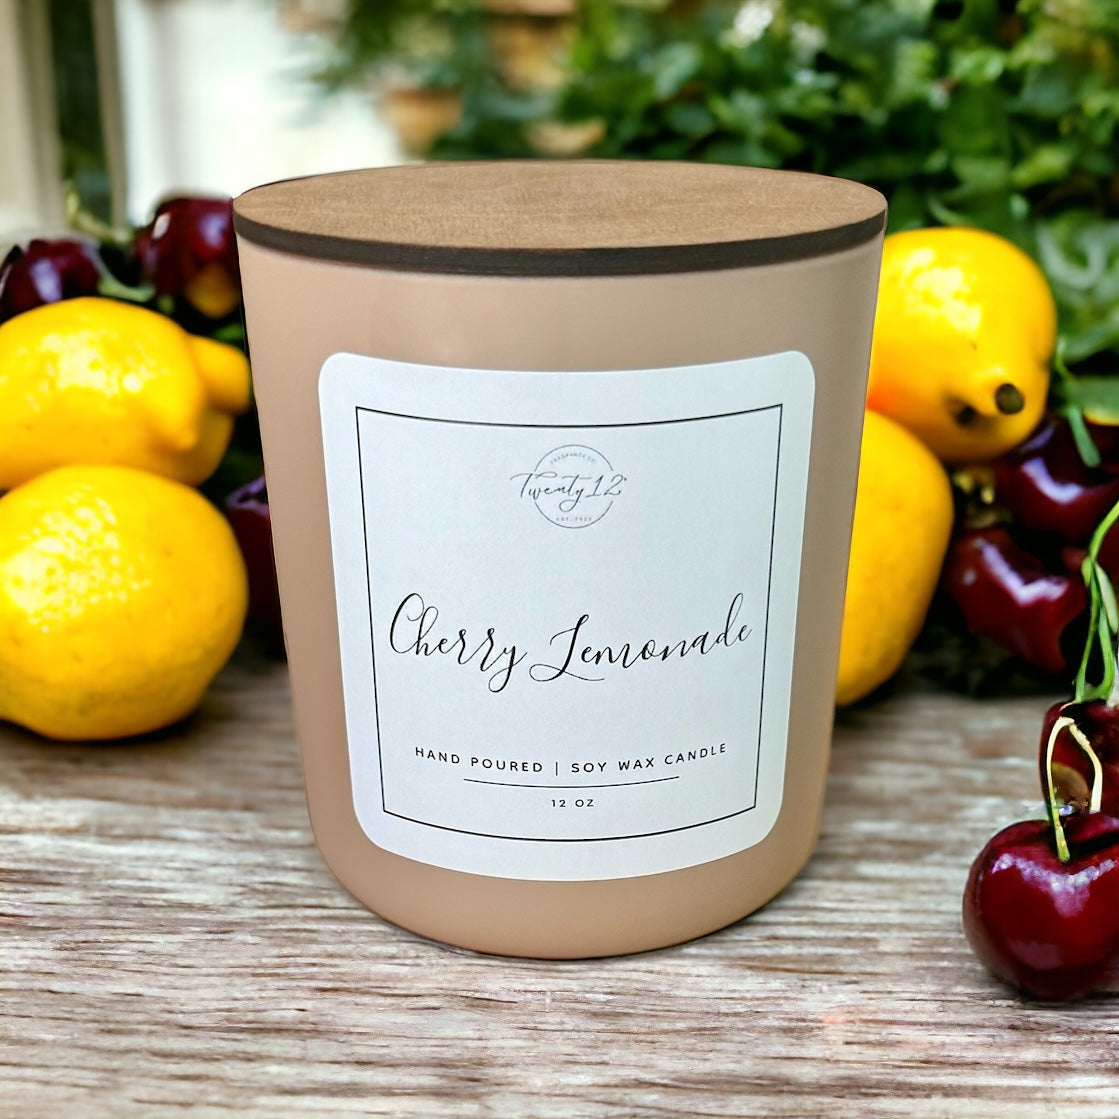 Cherry Lemonade Candle